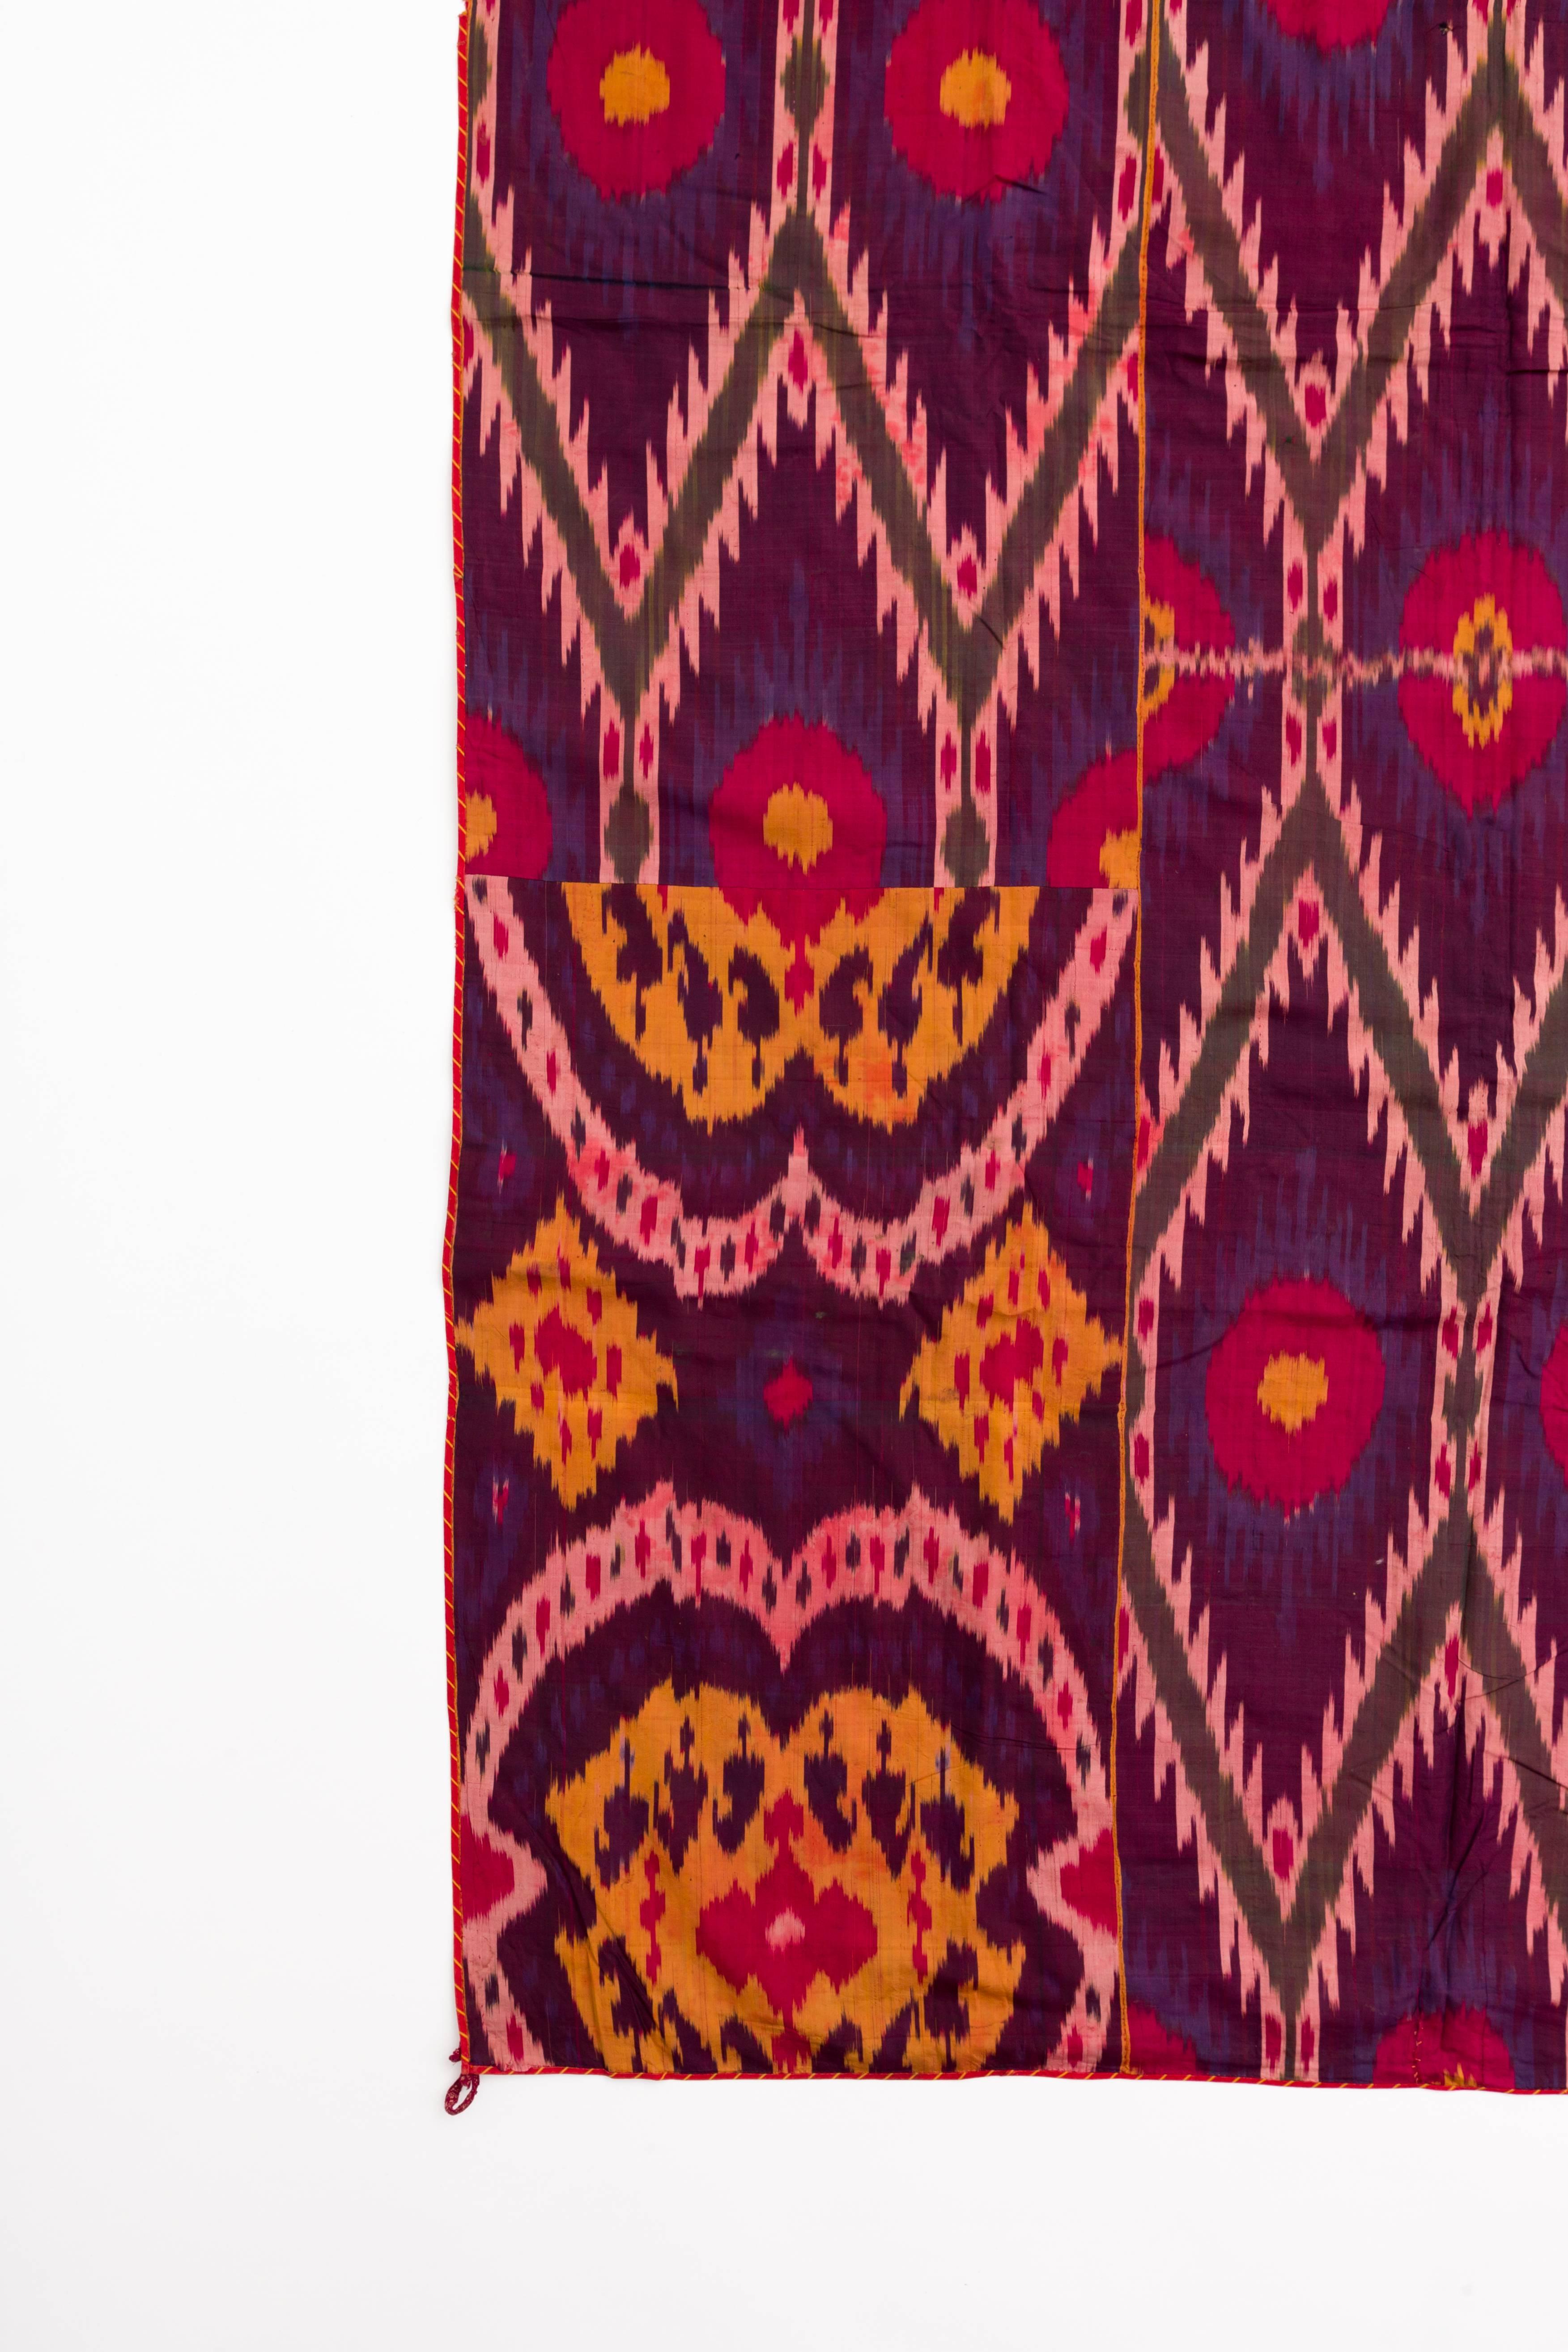 Late 19th Century Uzbekistan Tribal Silk Ikat Panel For Sale 2